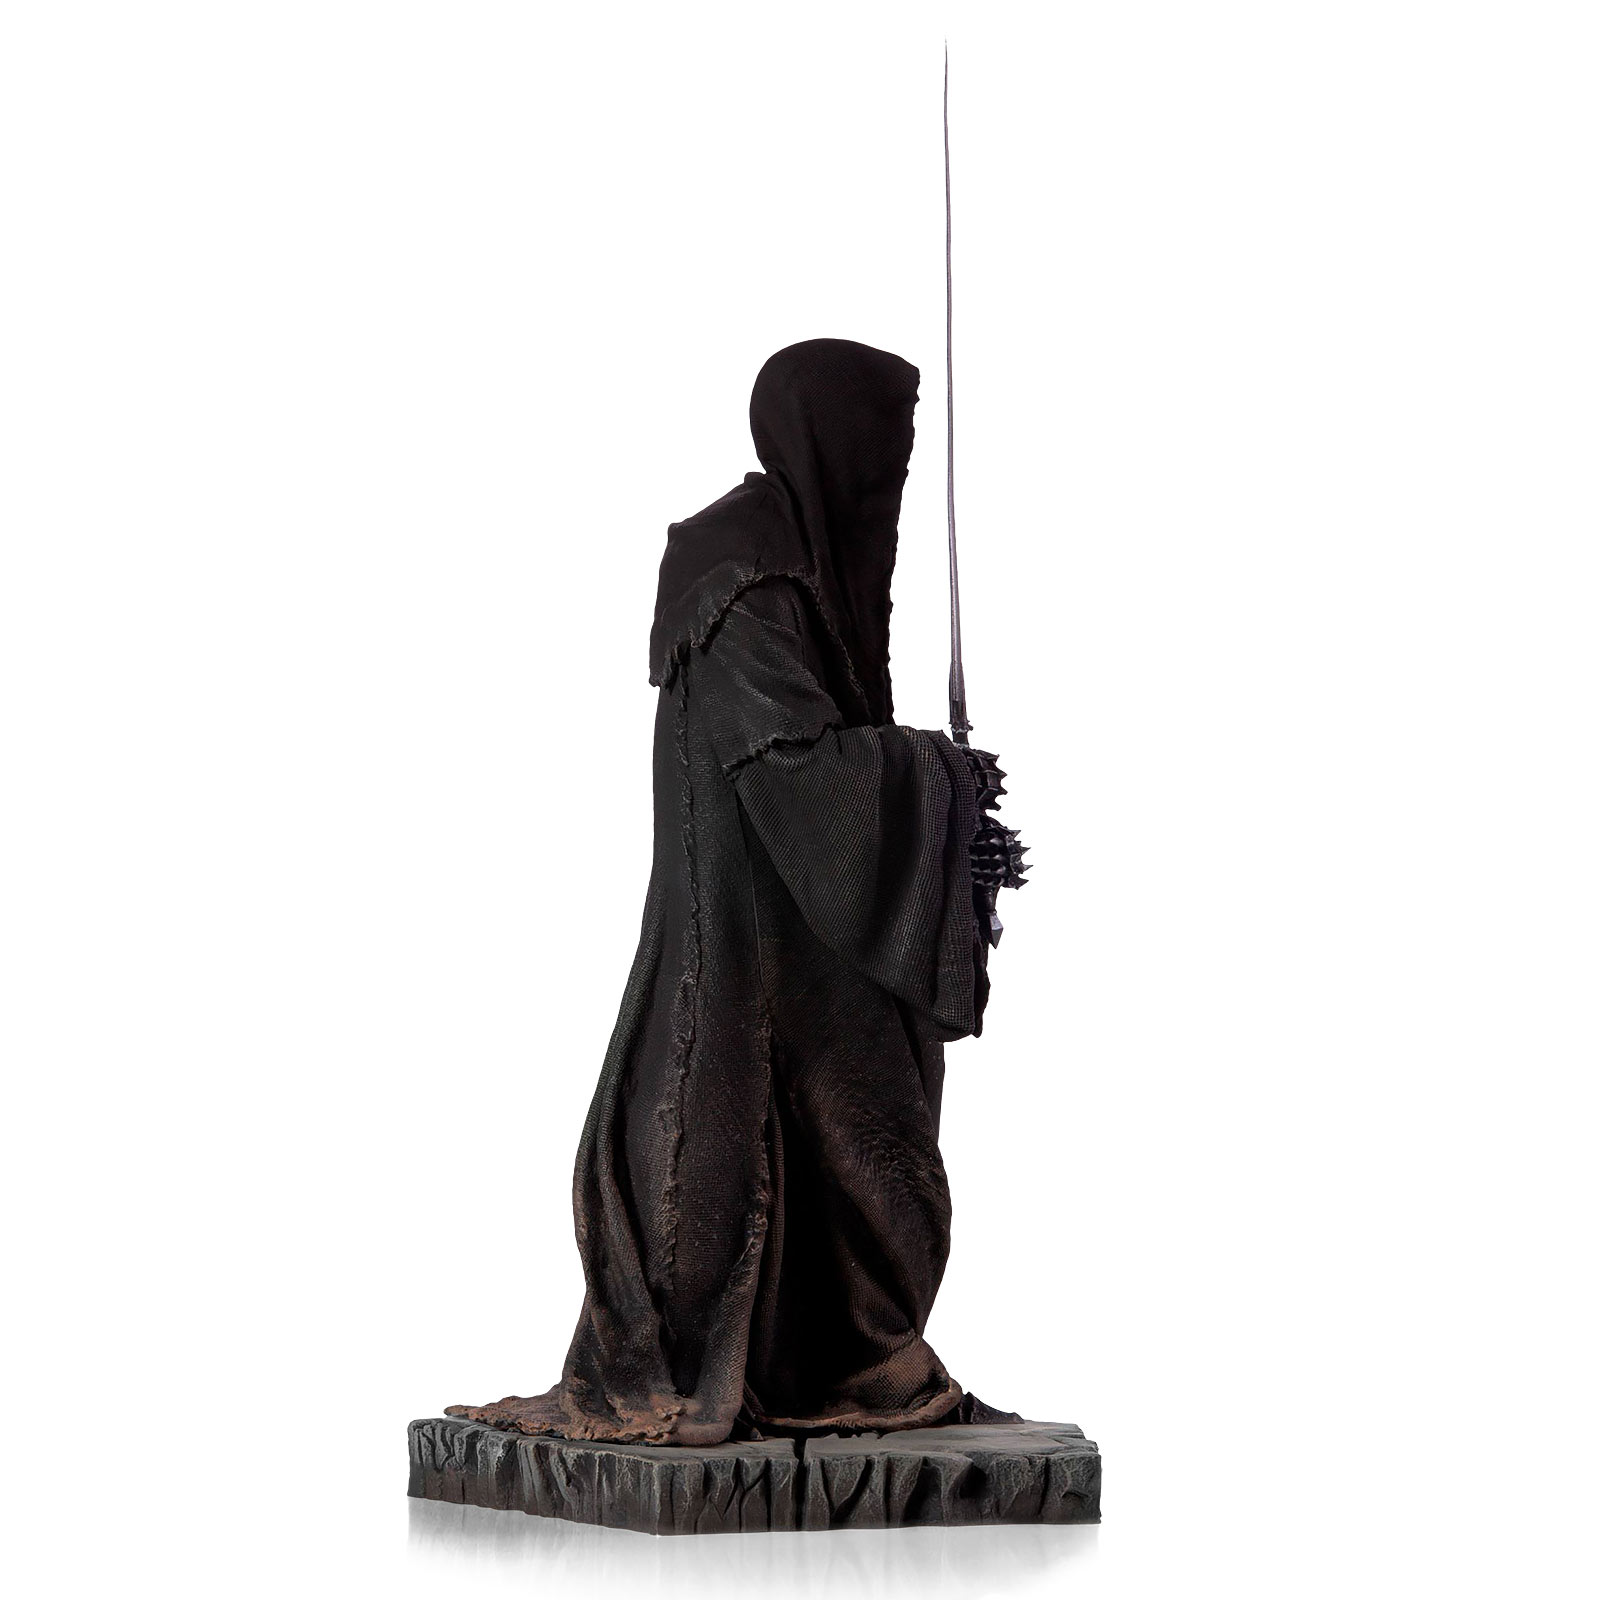 Herr der Ringe - Nazgul BDS Art Scale Deluxe Statue 27 cm